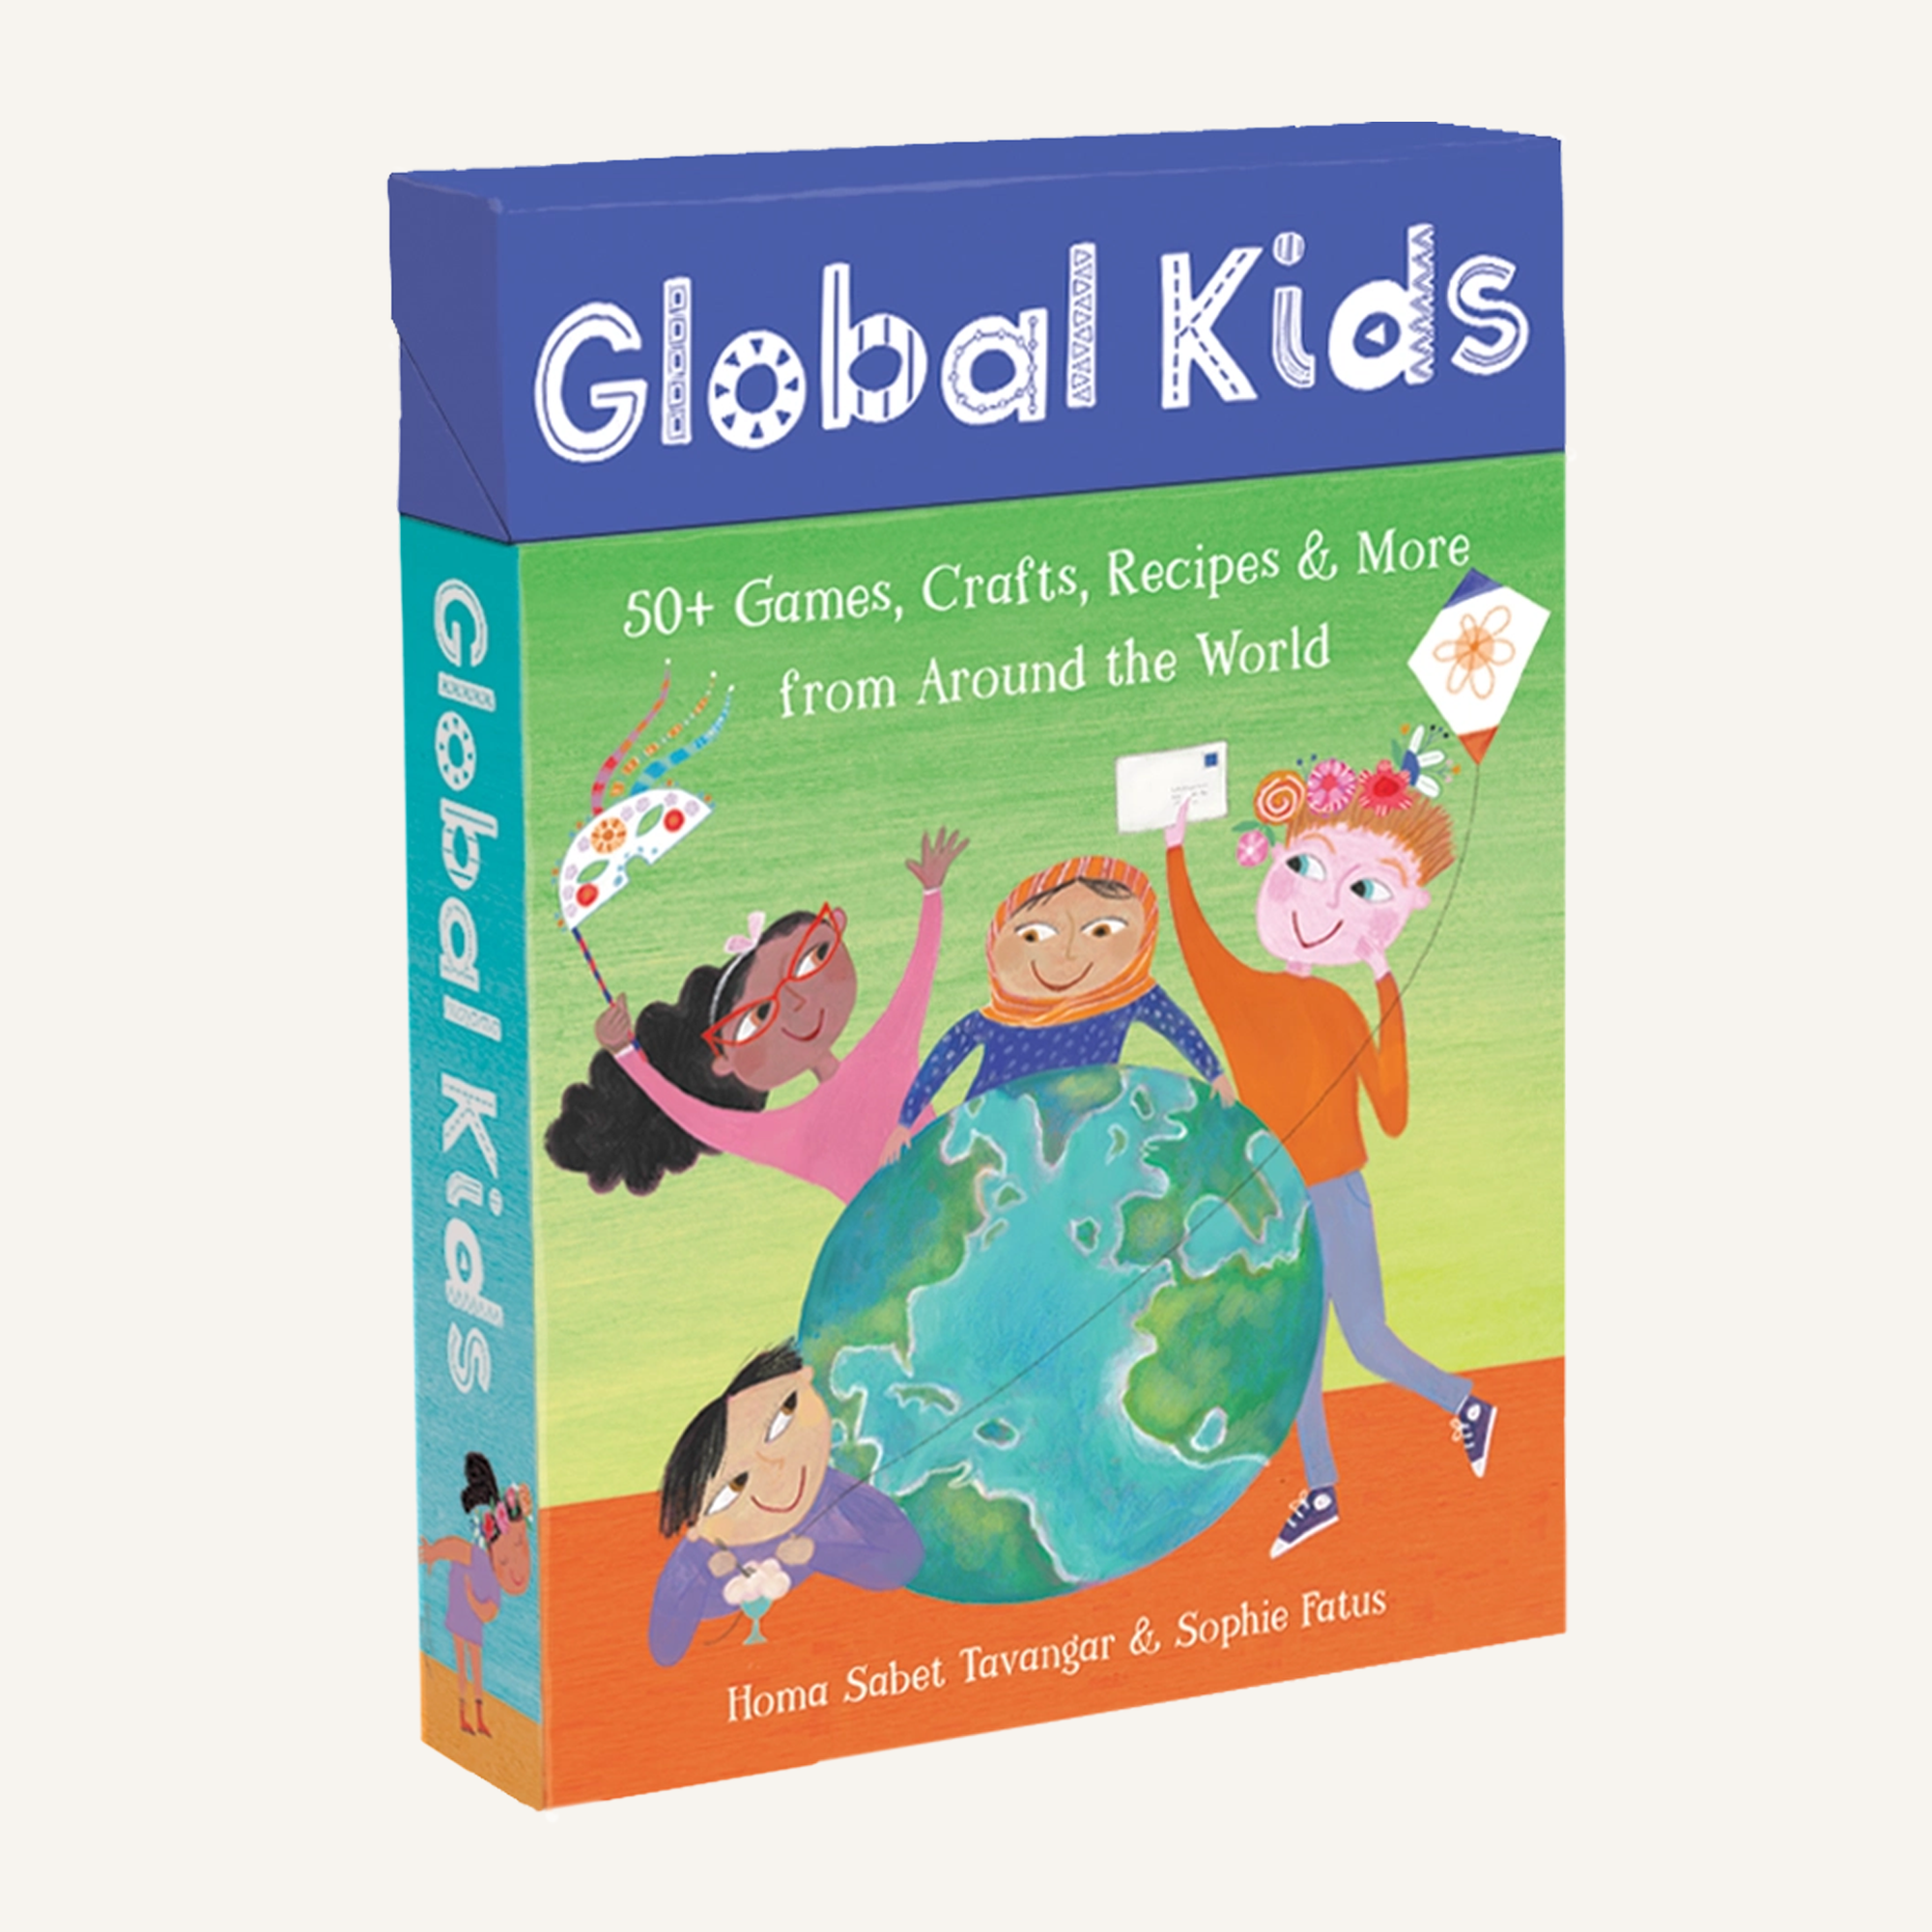 Global Kids: 50+ Games, Crafts, Recipes & More